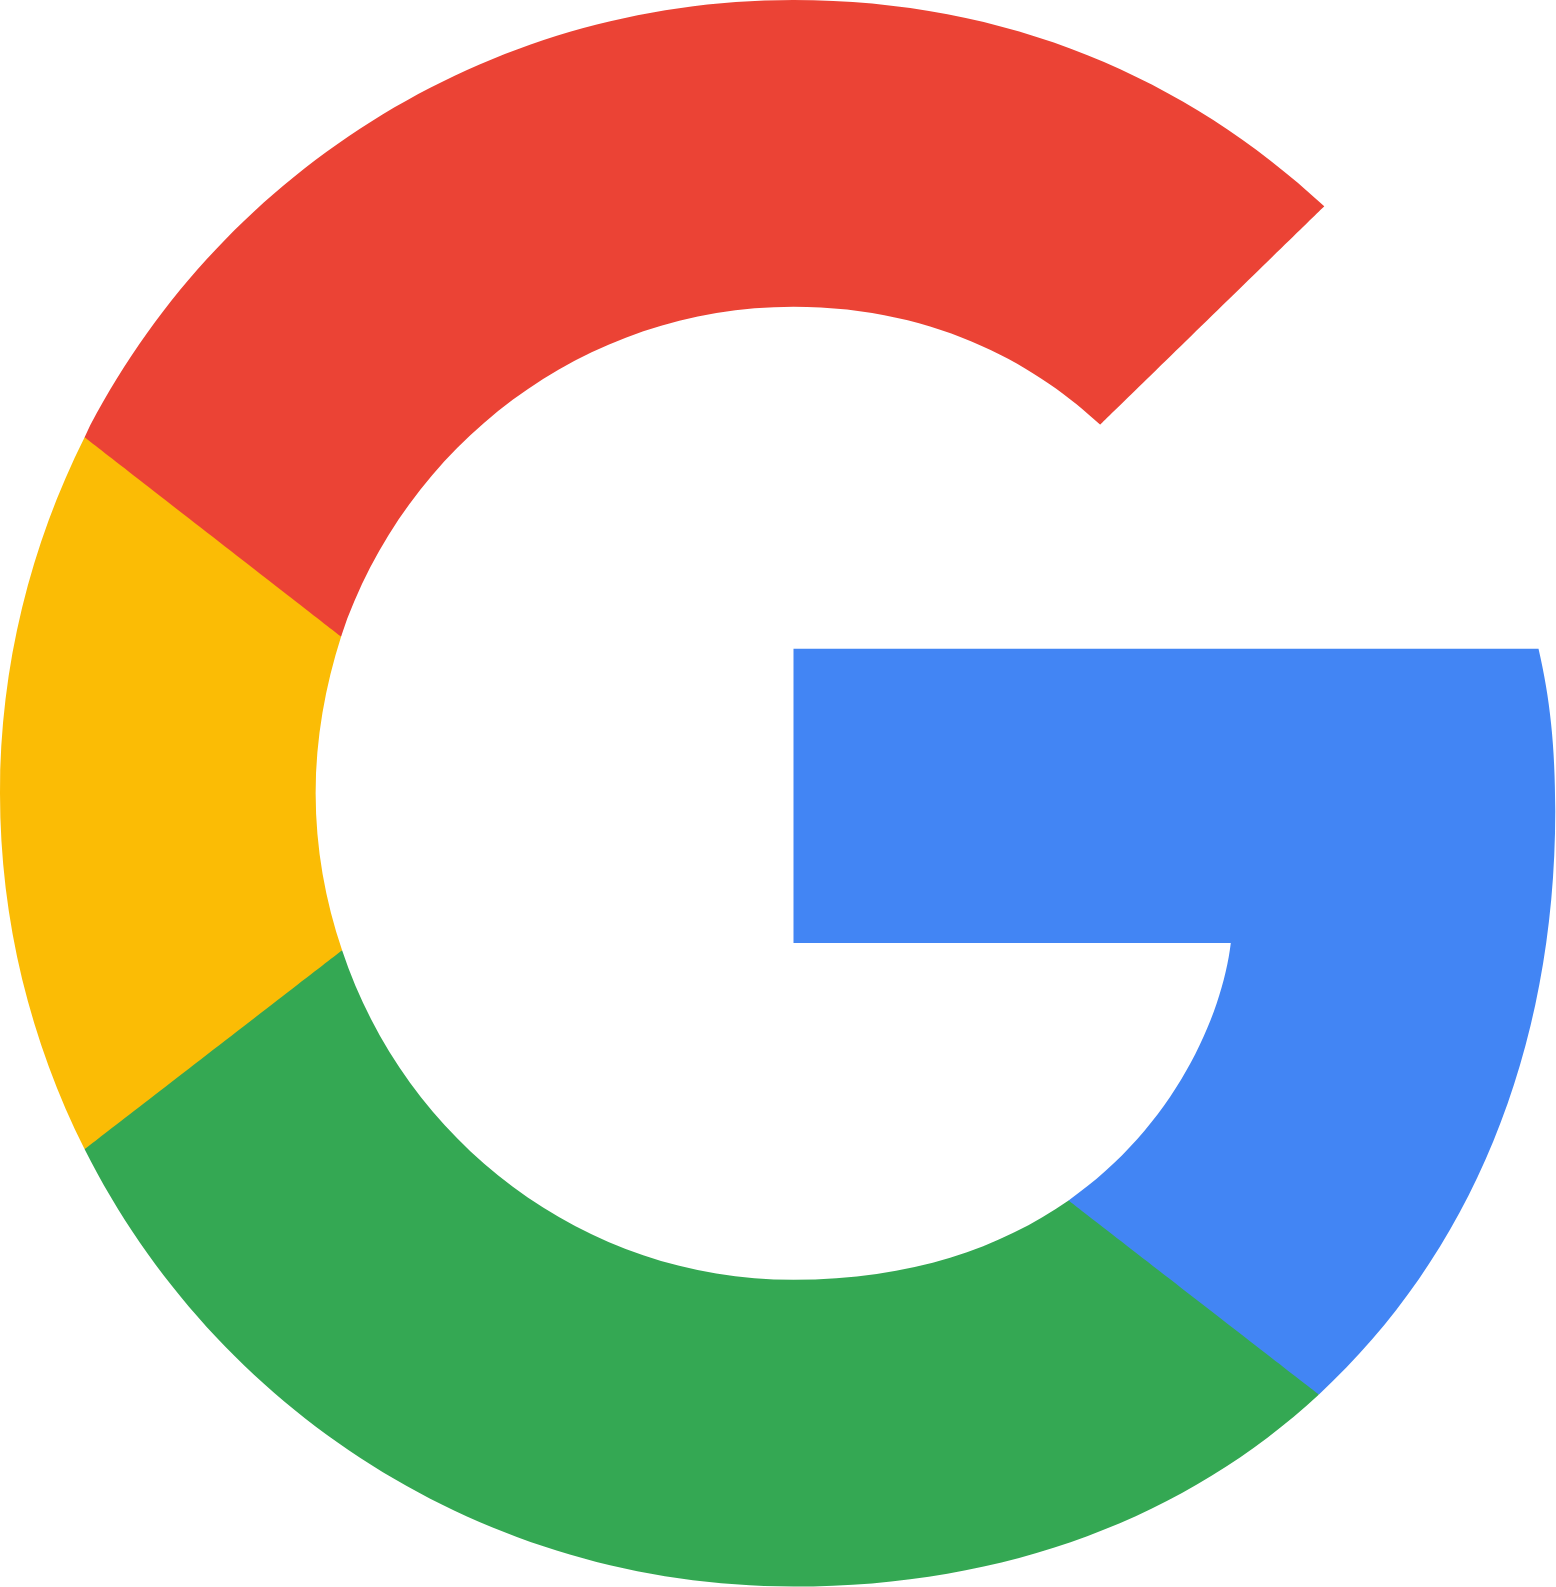 Alphabet (Google) logo (transparent PNG)